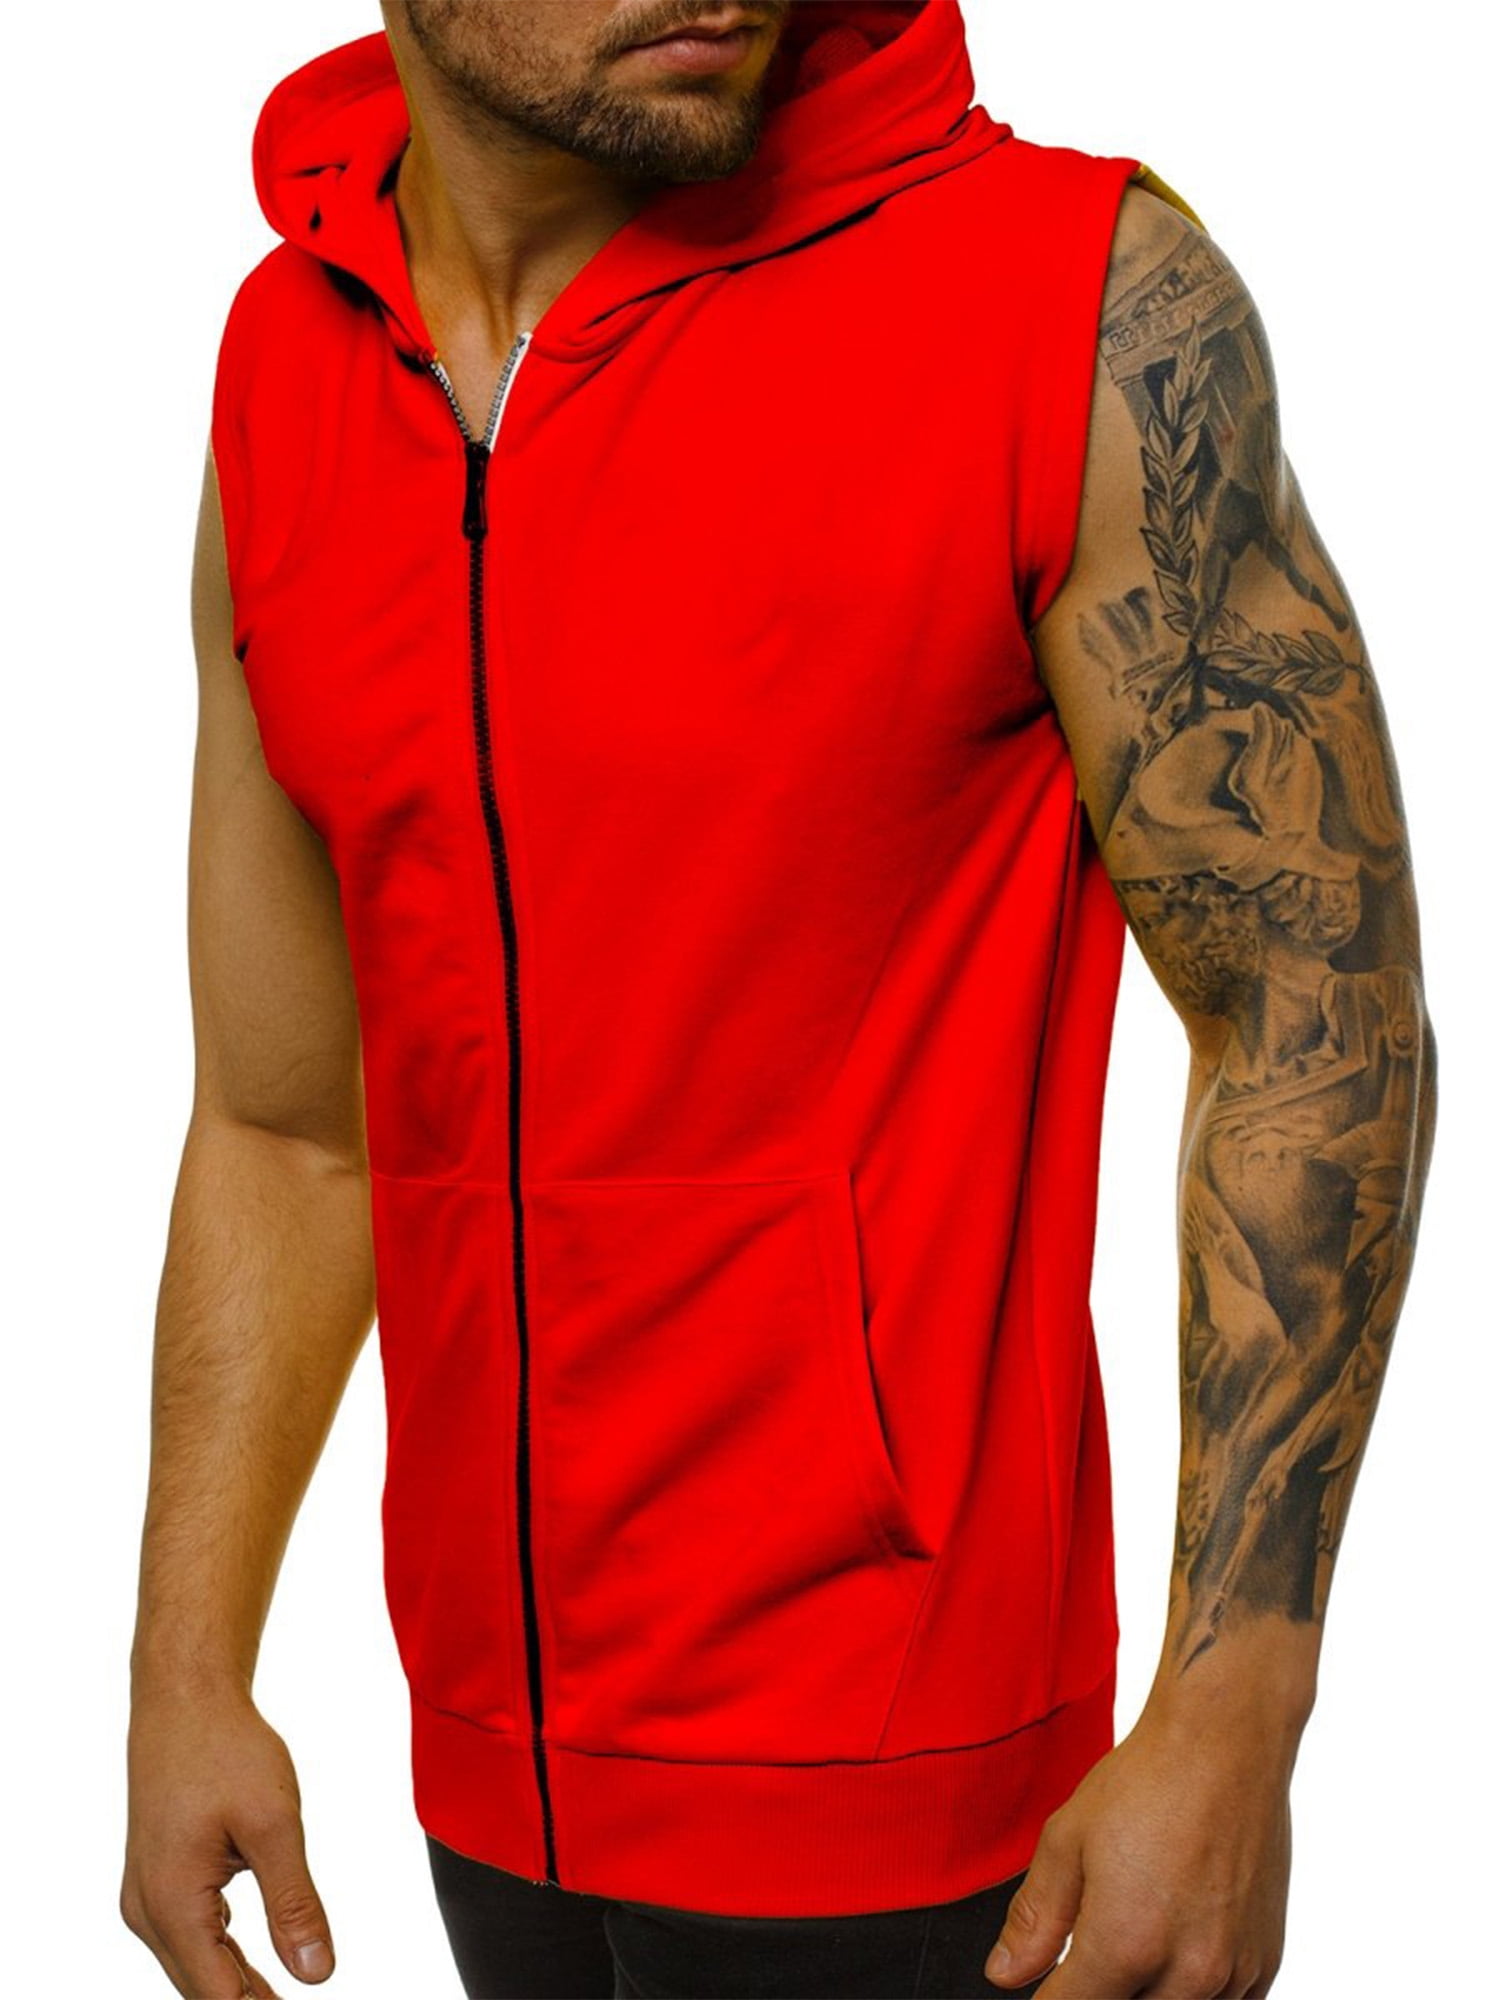 Men Zipper Jacket Long Sleeve Bodybuilding Sweatshirts Gym Muscle Fit yooocart